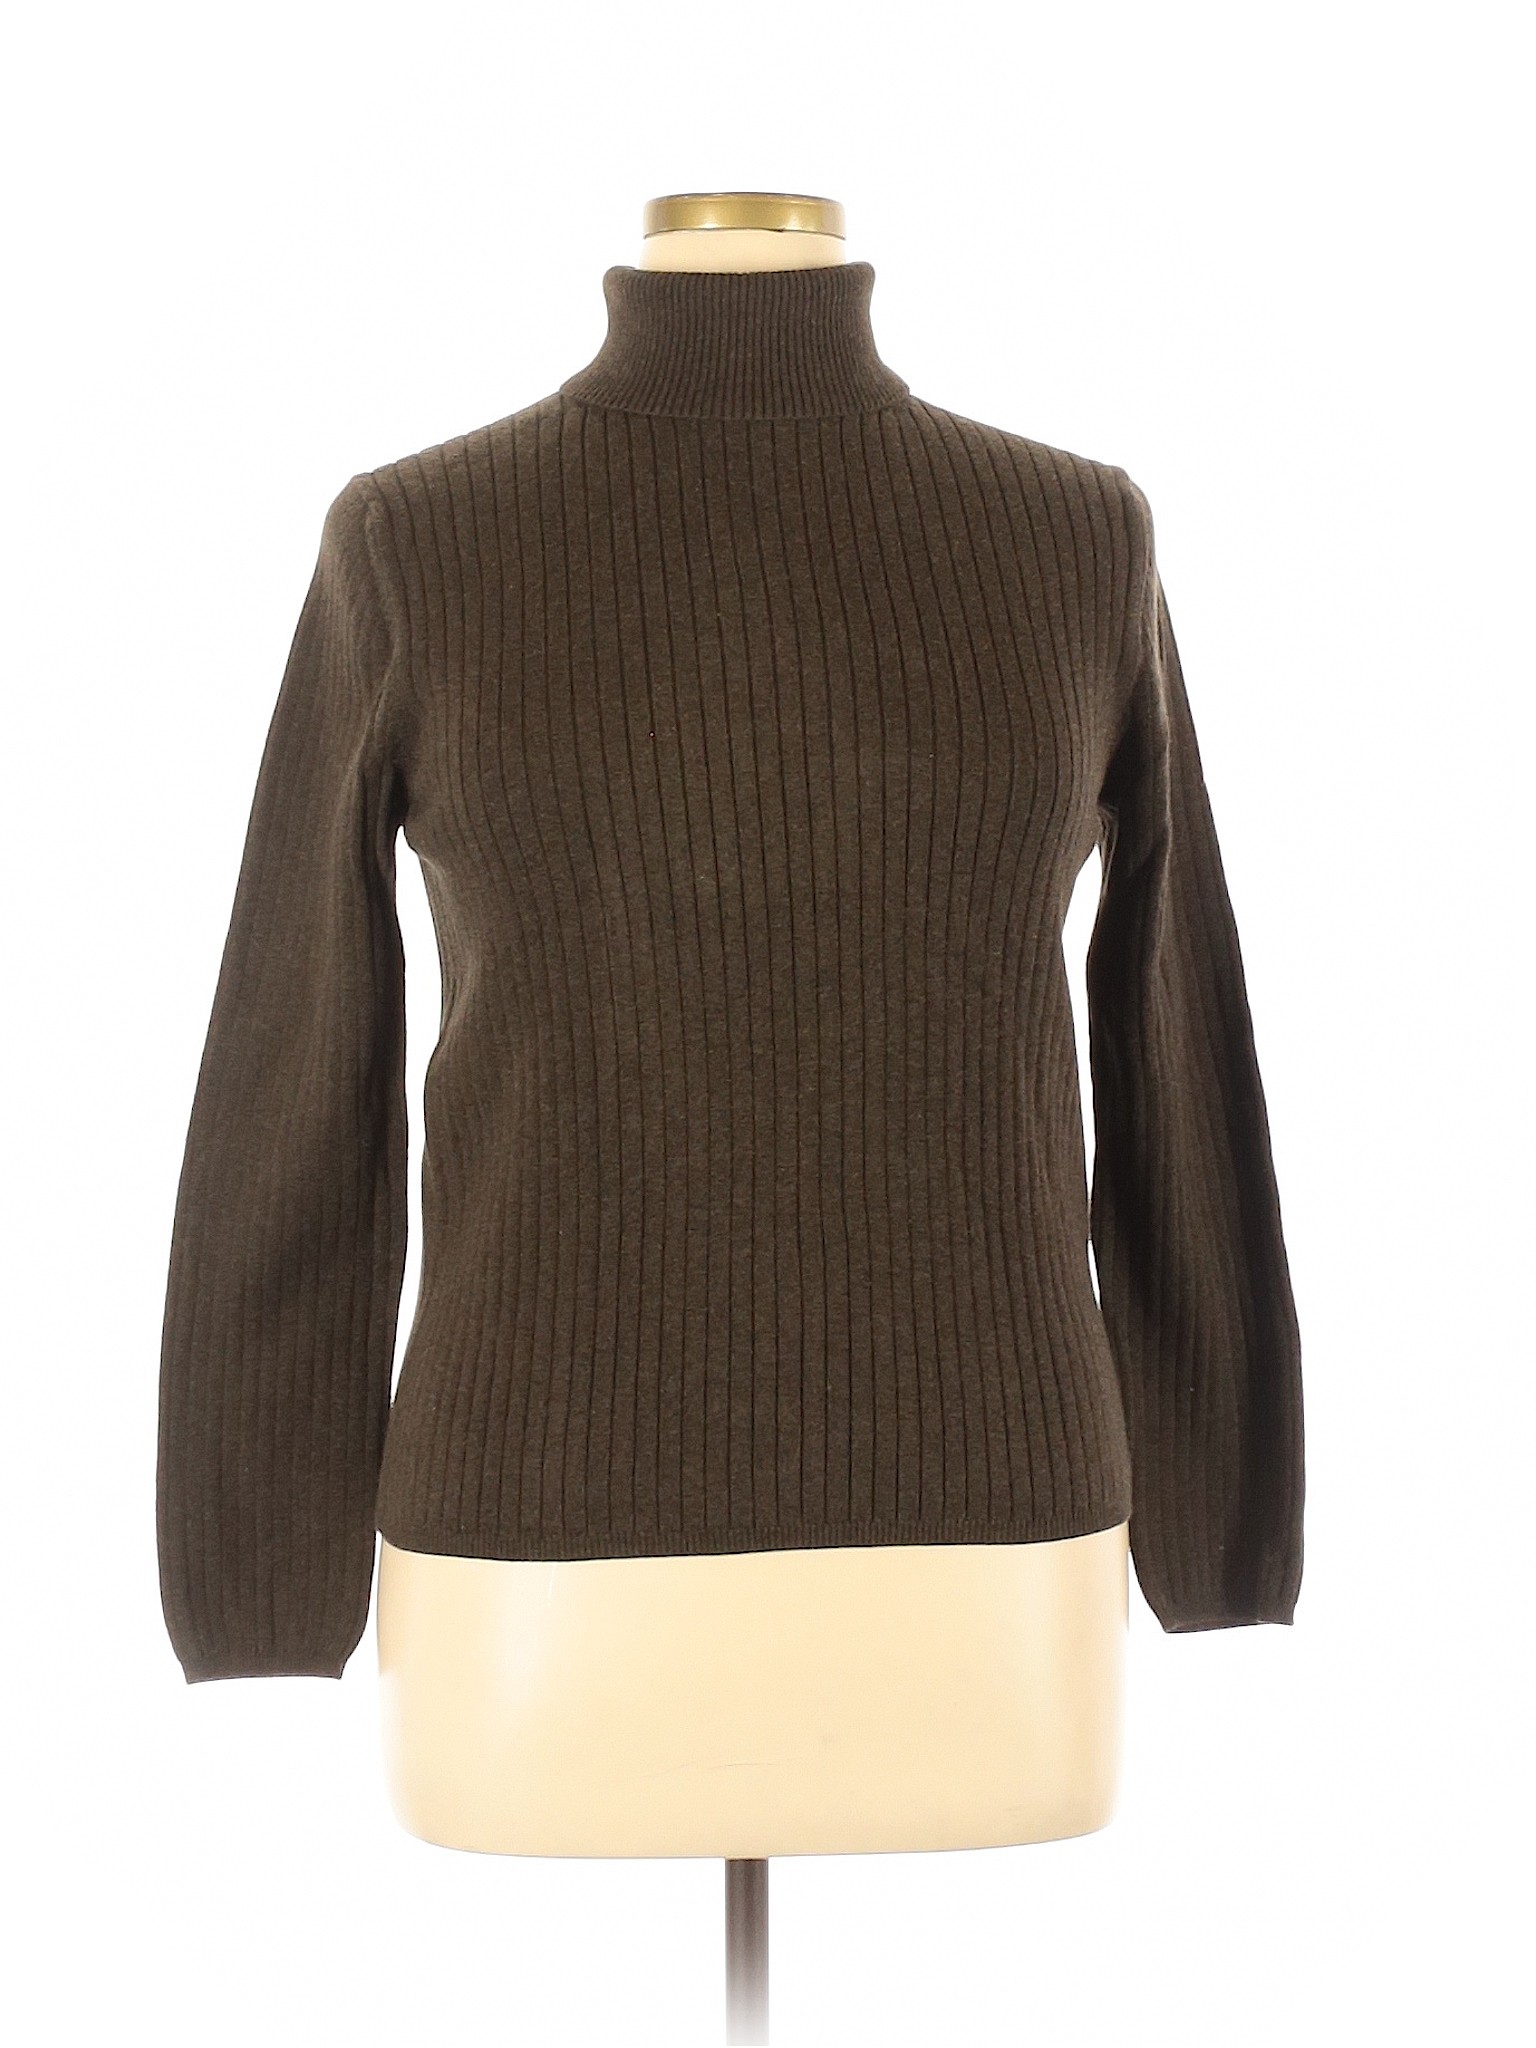 Talbots Women Brown Turtleneck Sweater XL | eBay